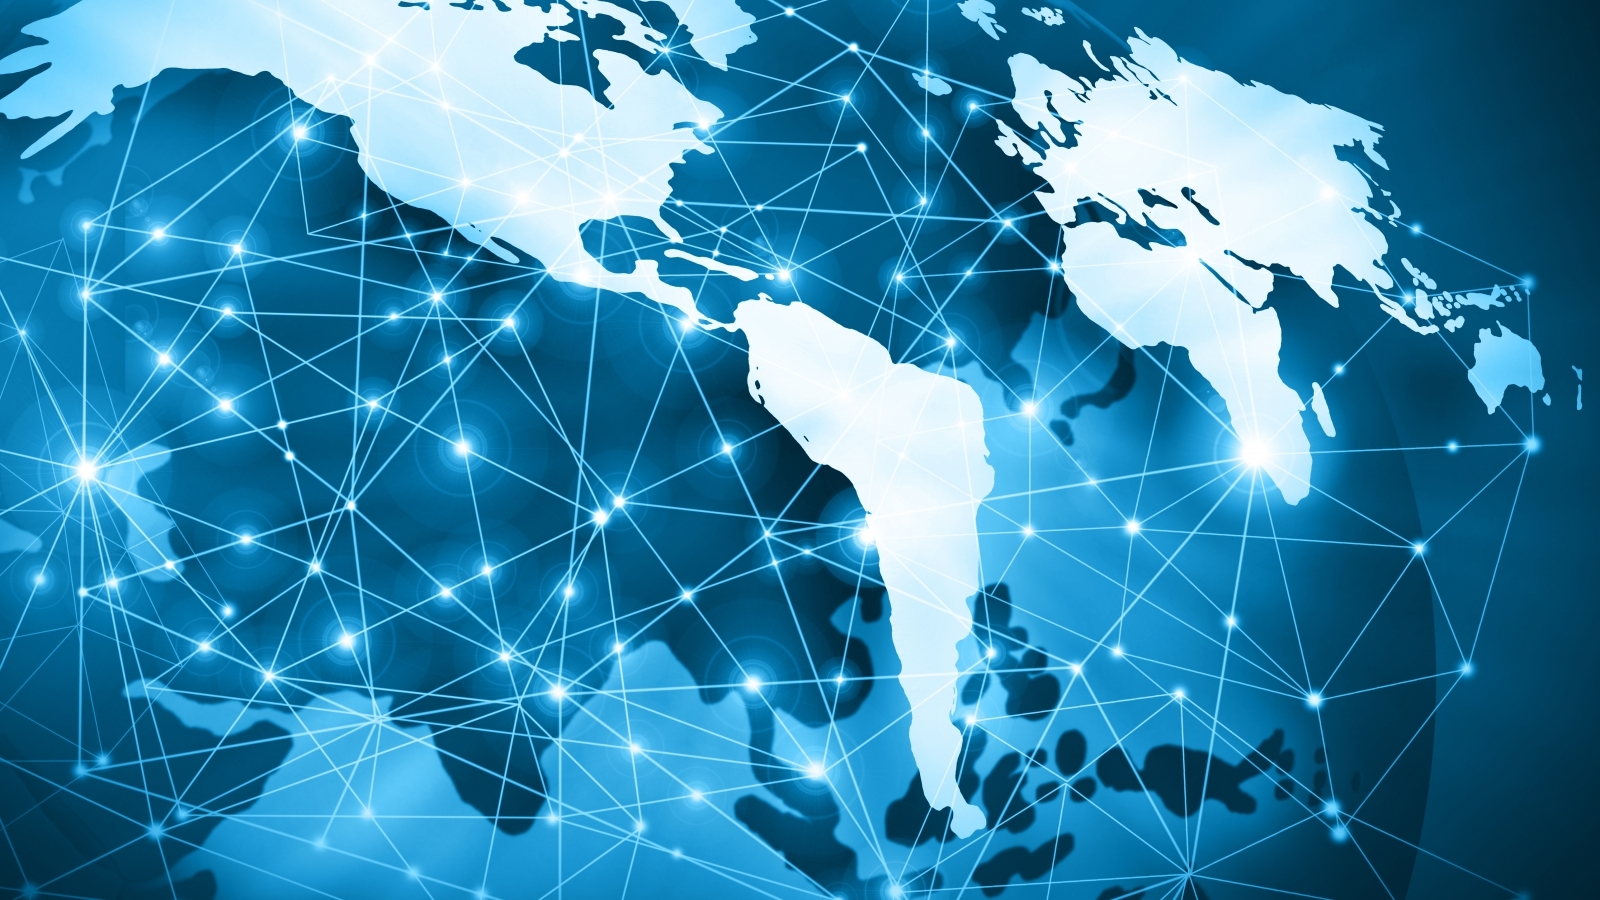 One Internet | Centre for International Governance Innovation